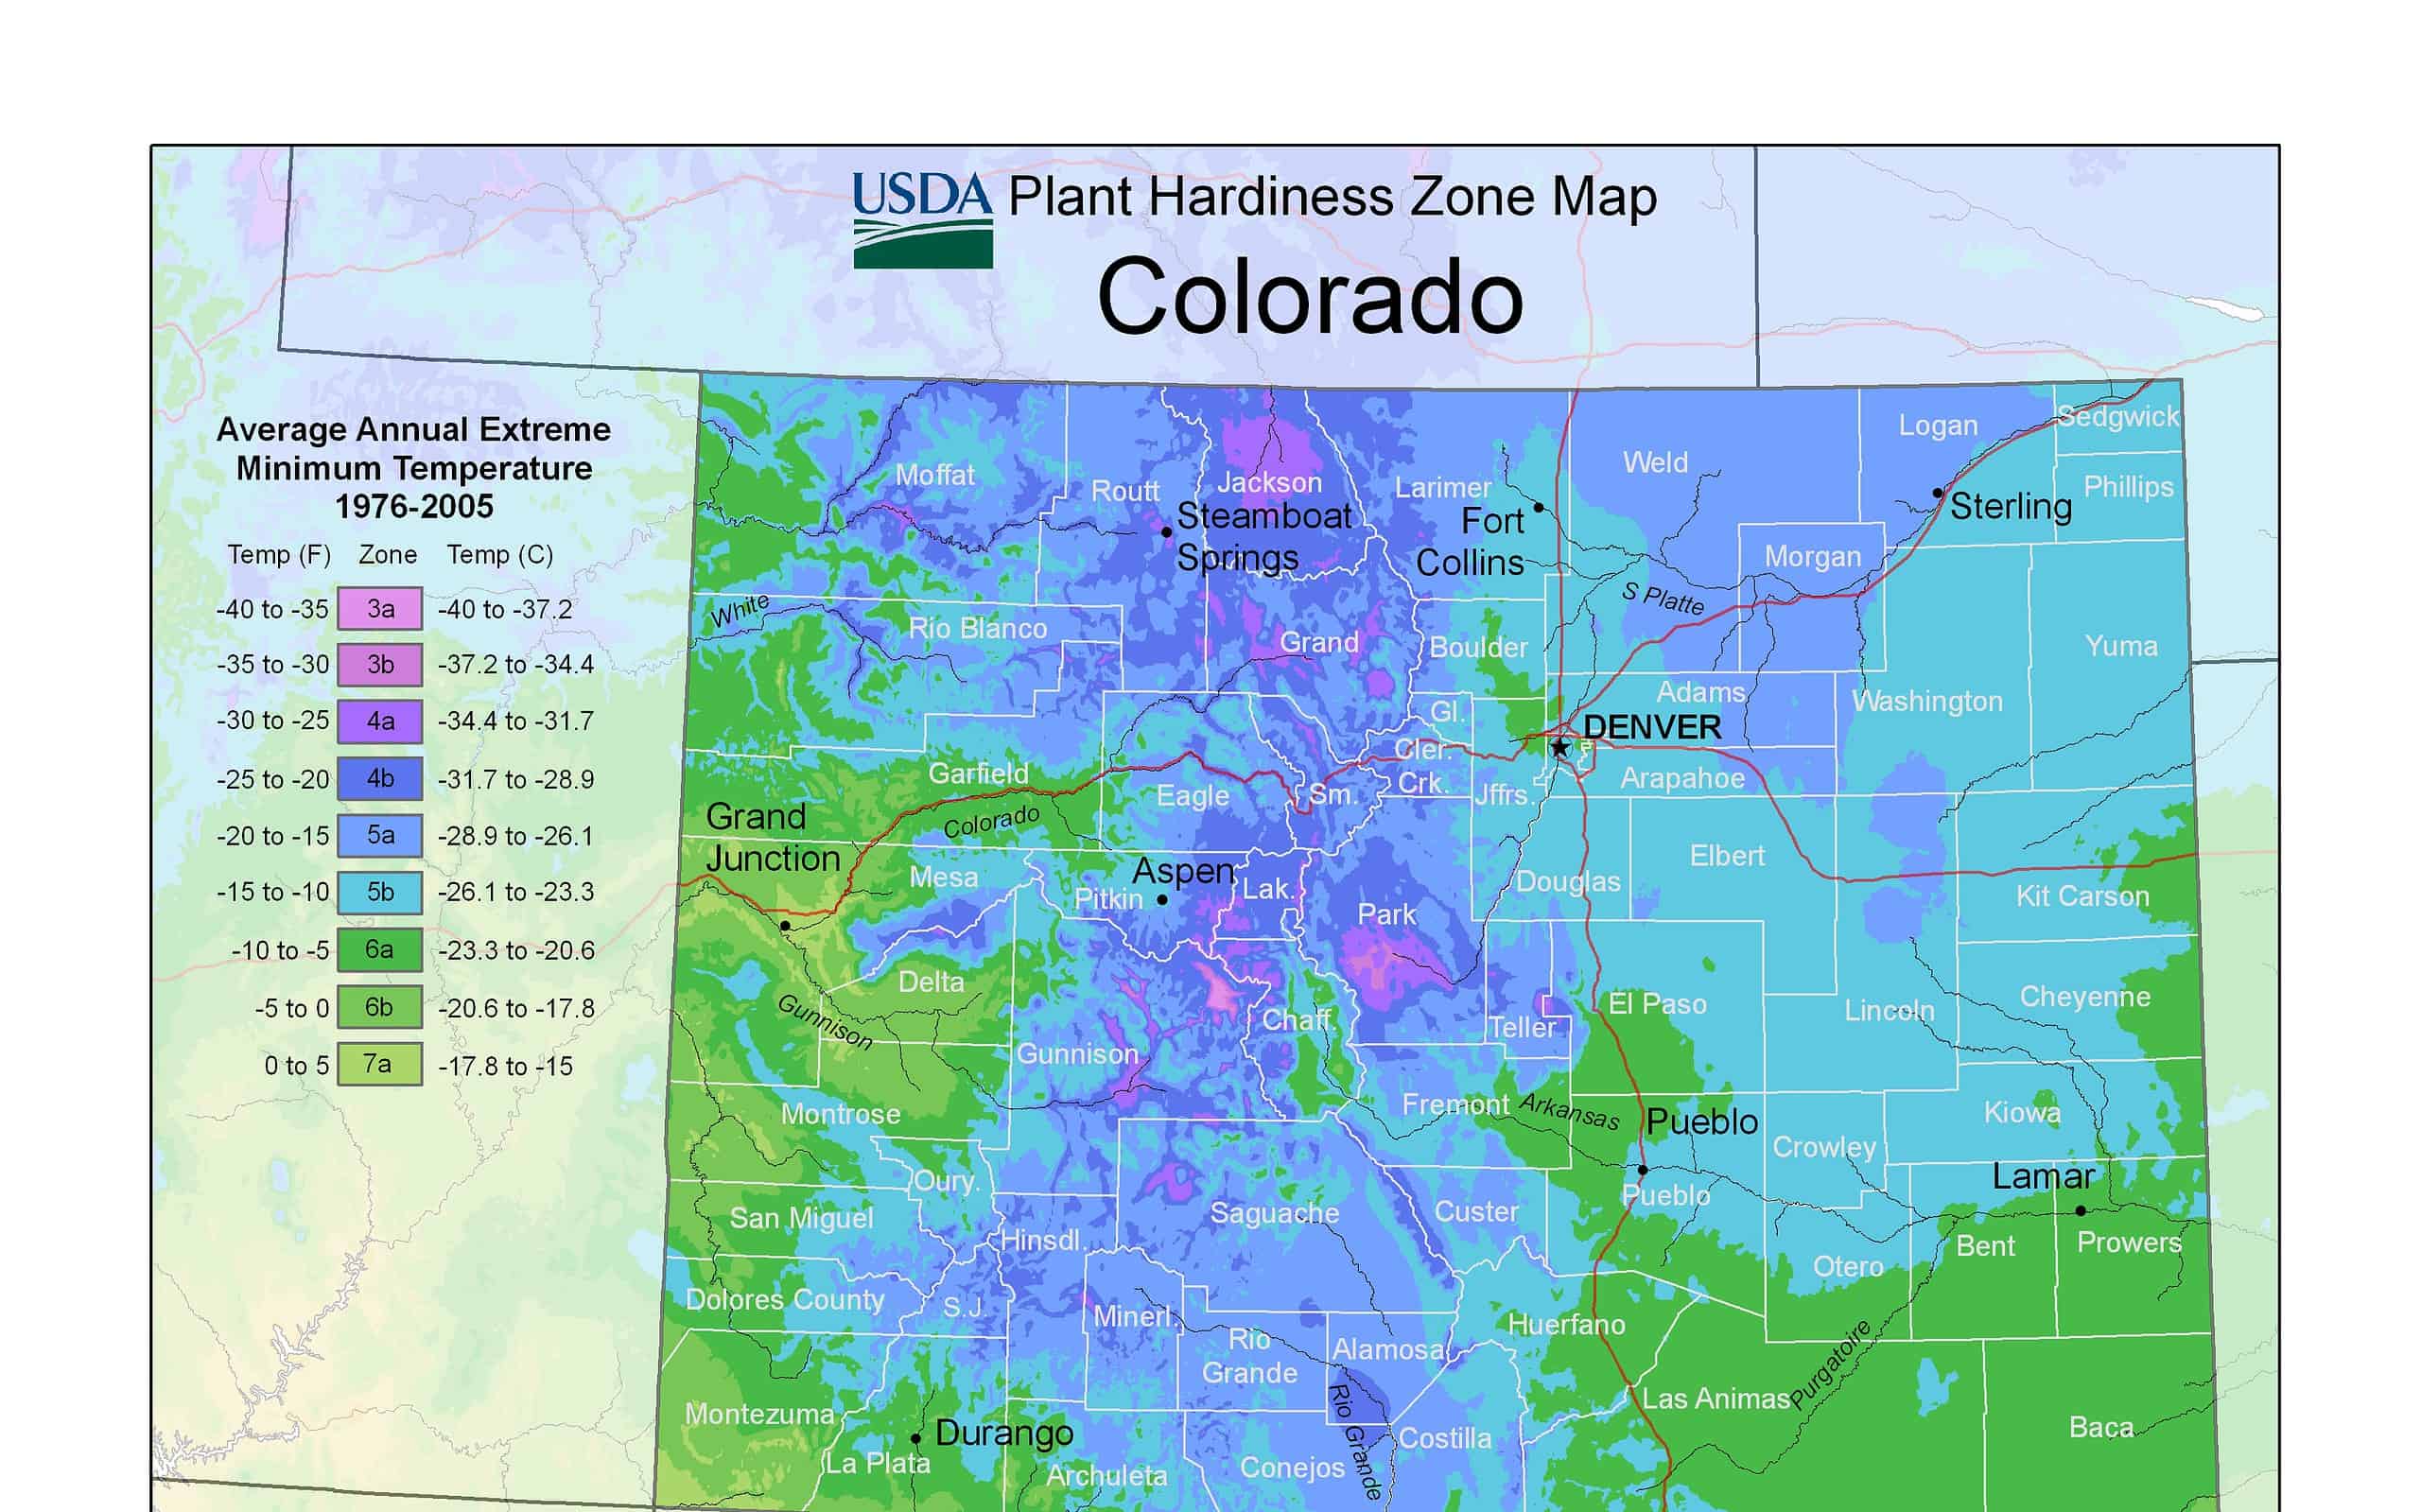 A map showing Colorado's planting zones